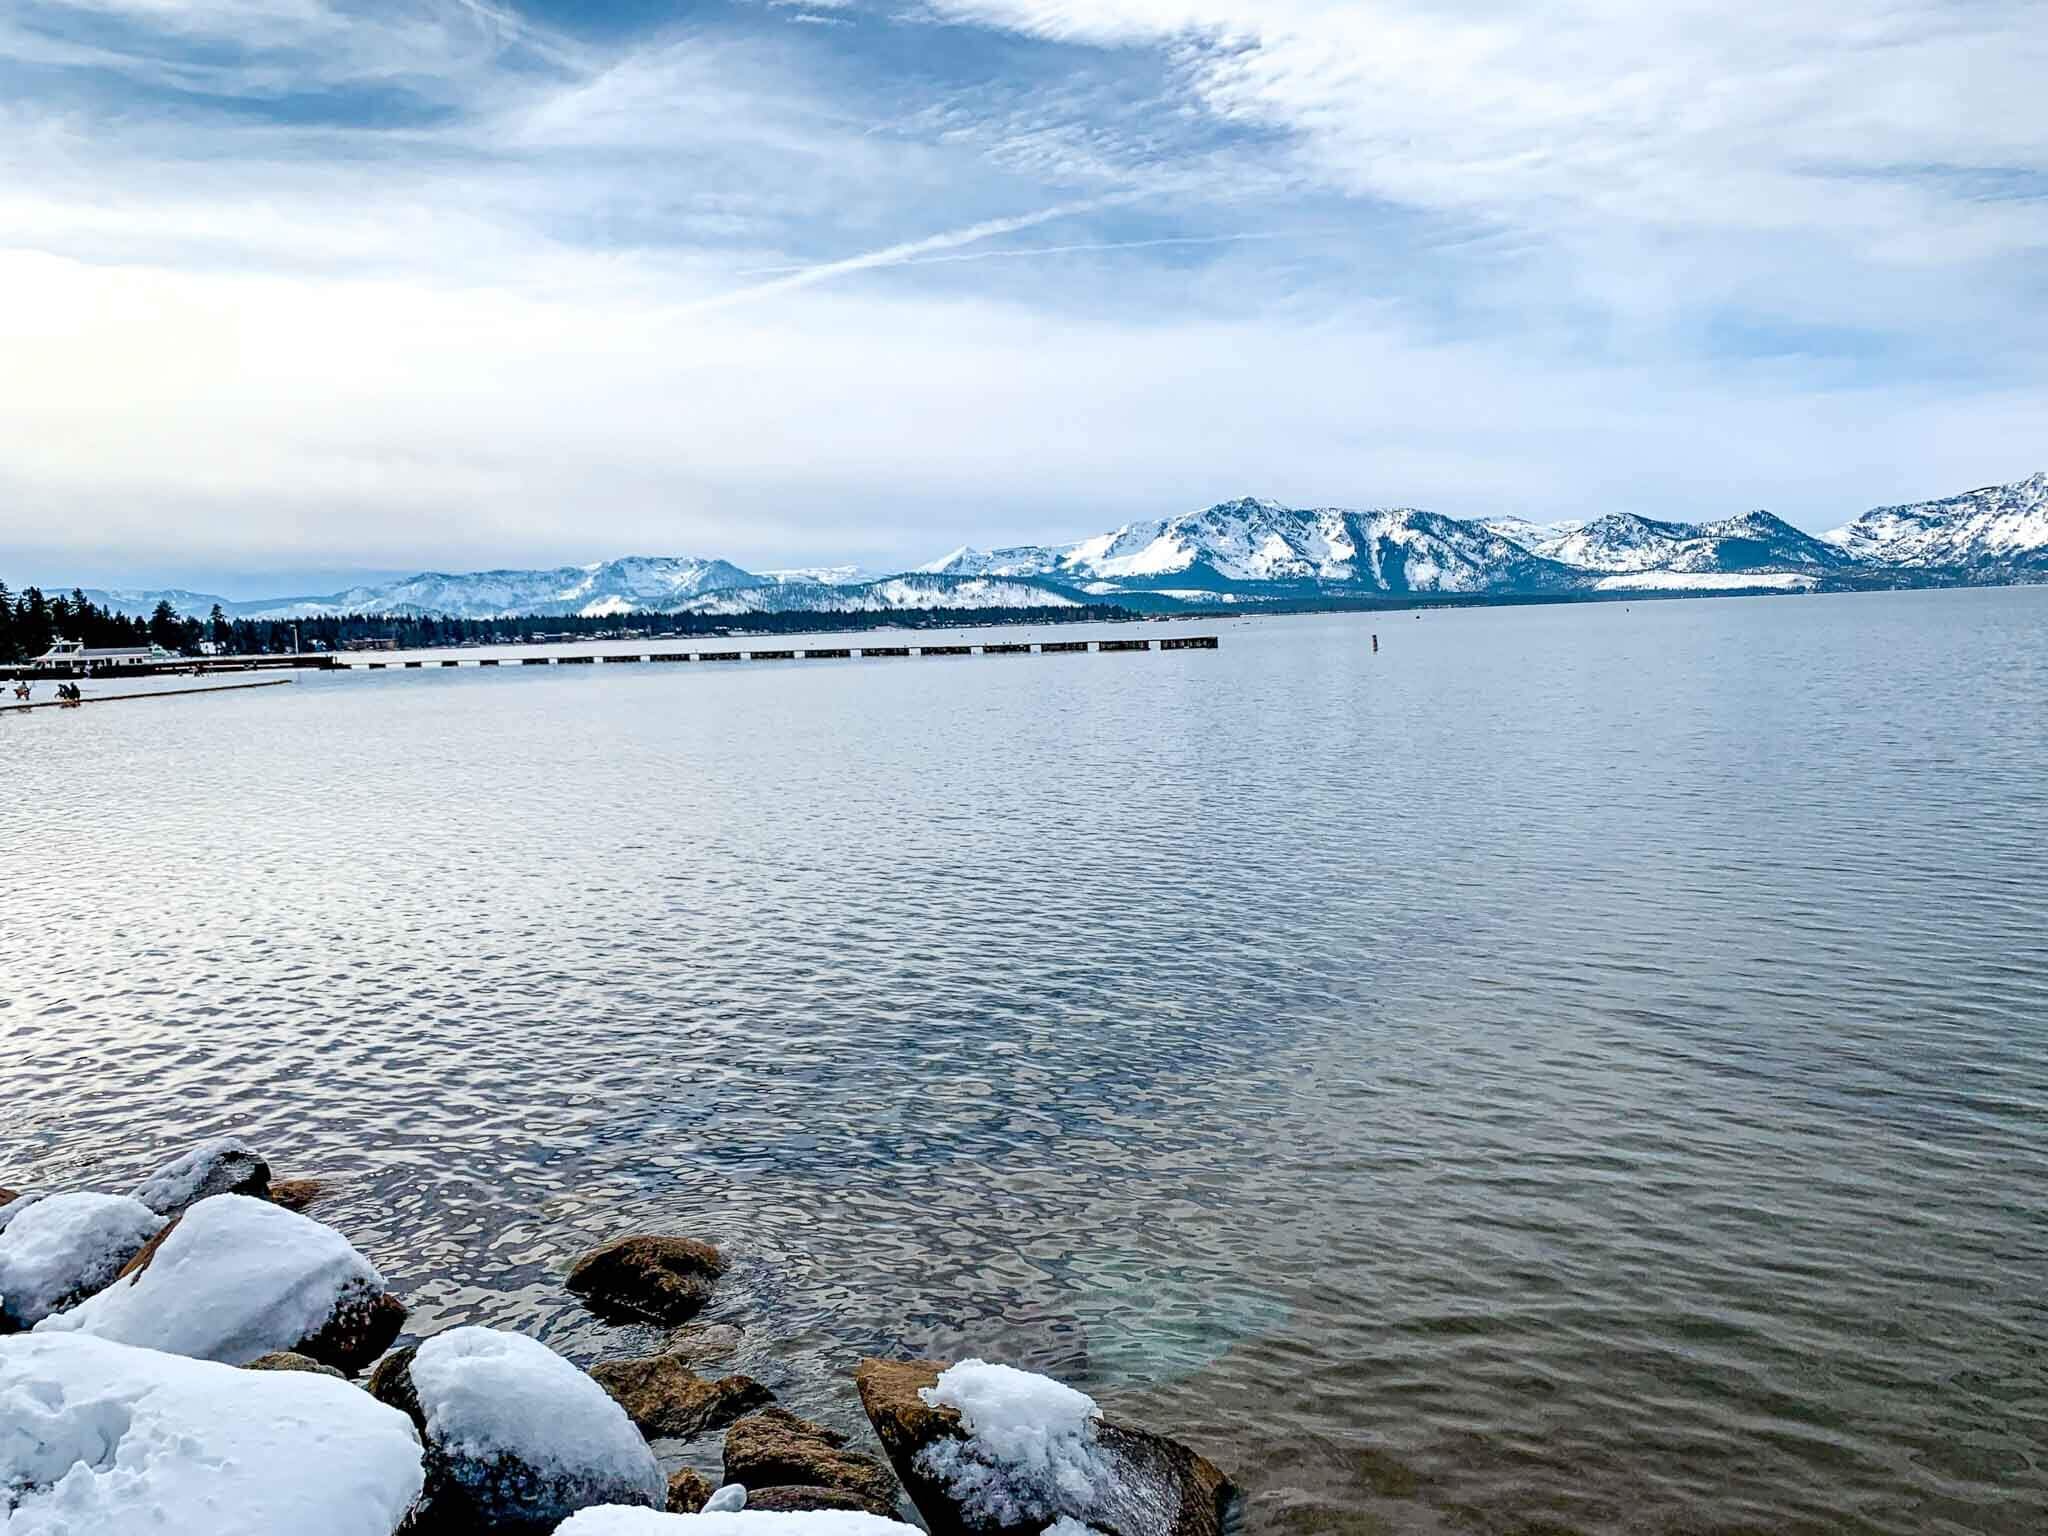 heavenly-ski-resort-lake-tahoe-usa-01.jpg